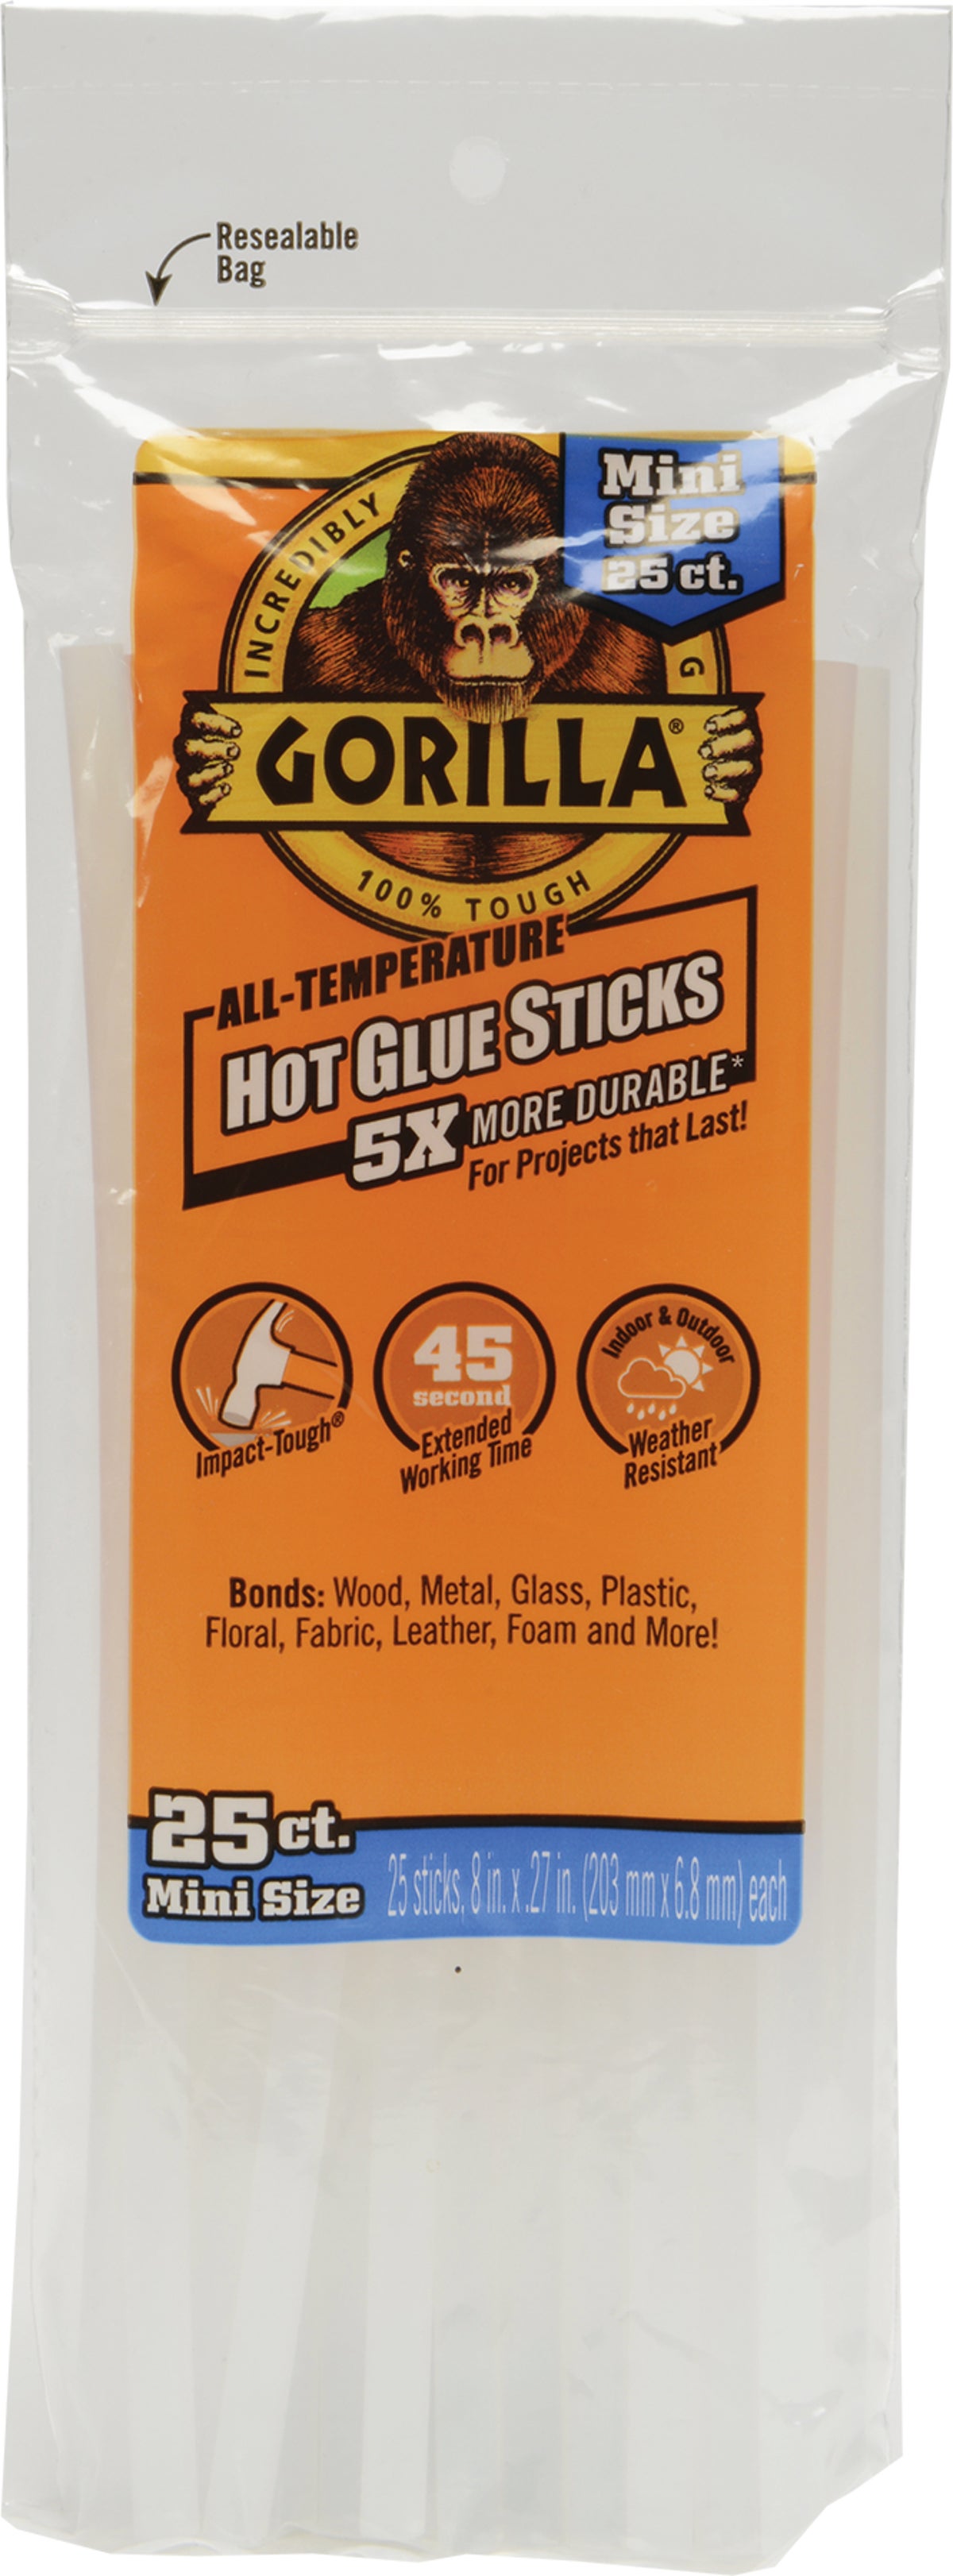 Gorilla Glue Mini Hot Glue Sticks - Pkg of 25, 8